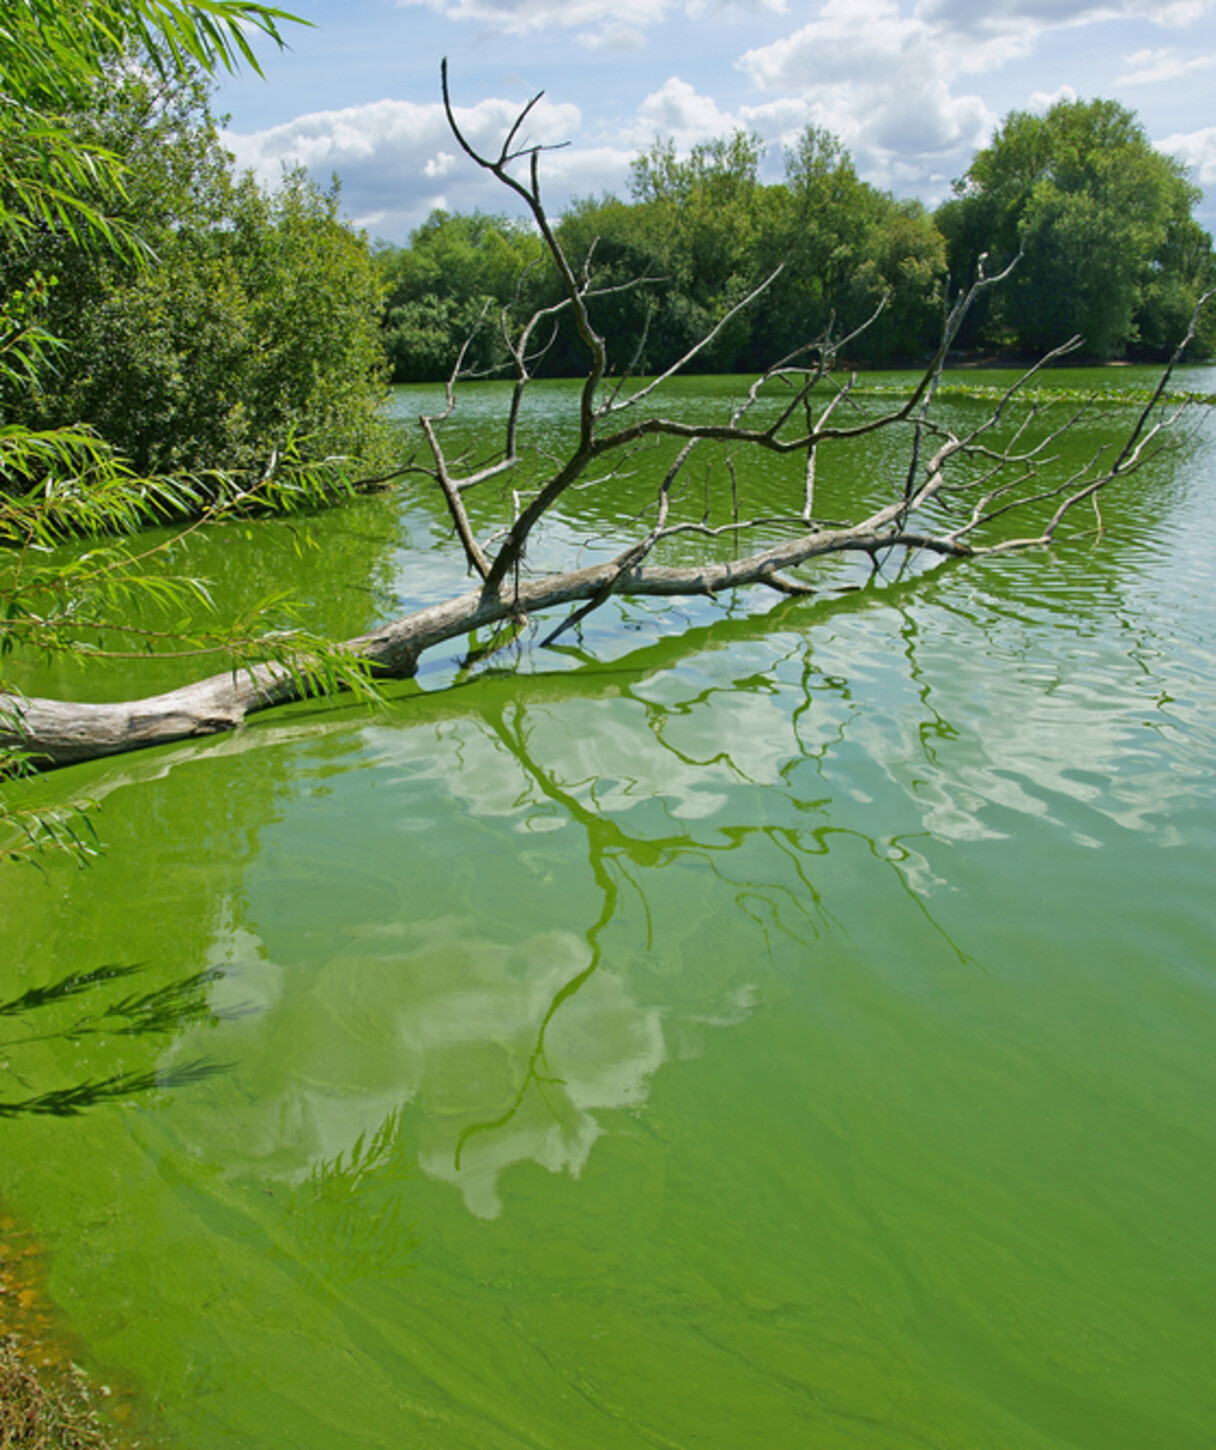 Blue-green algae or cyanobacteria become nuisance algae at high densities